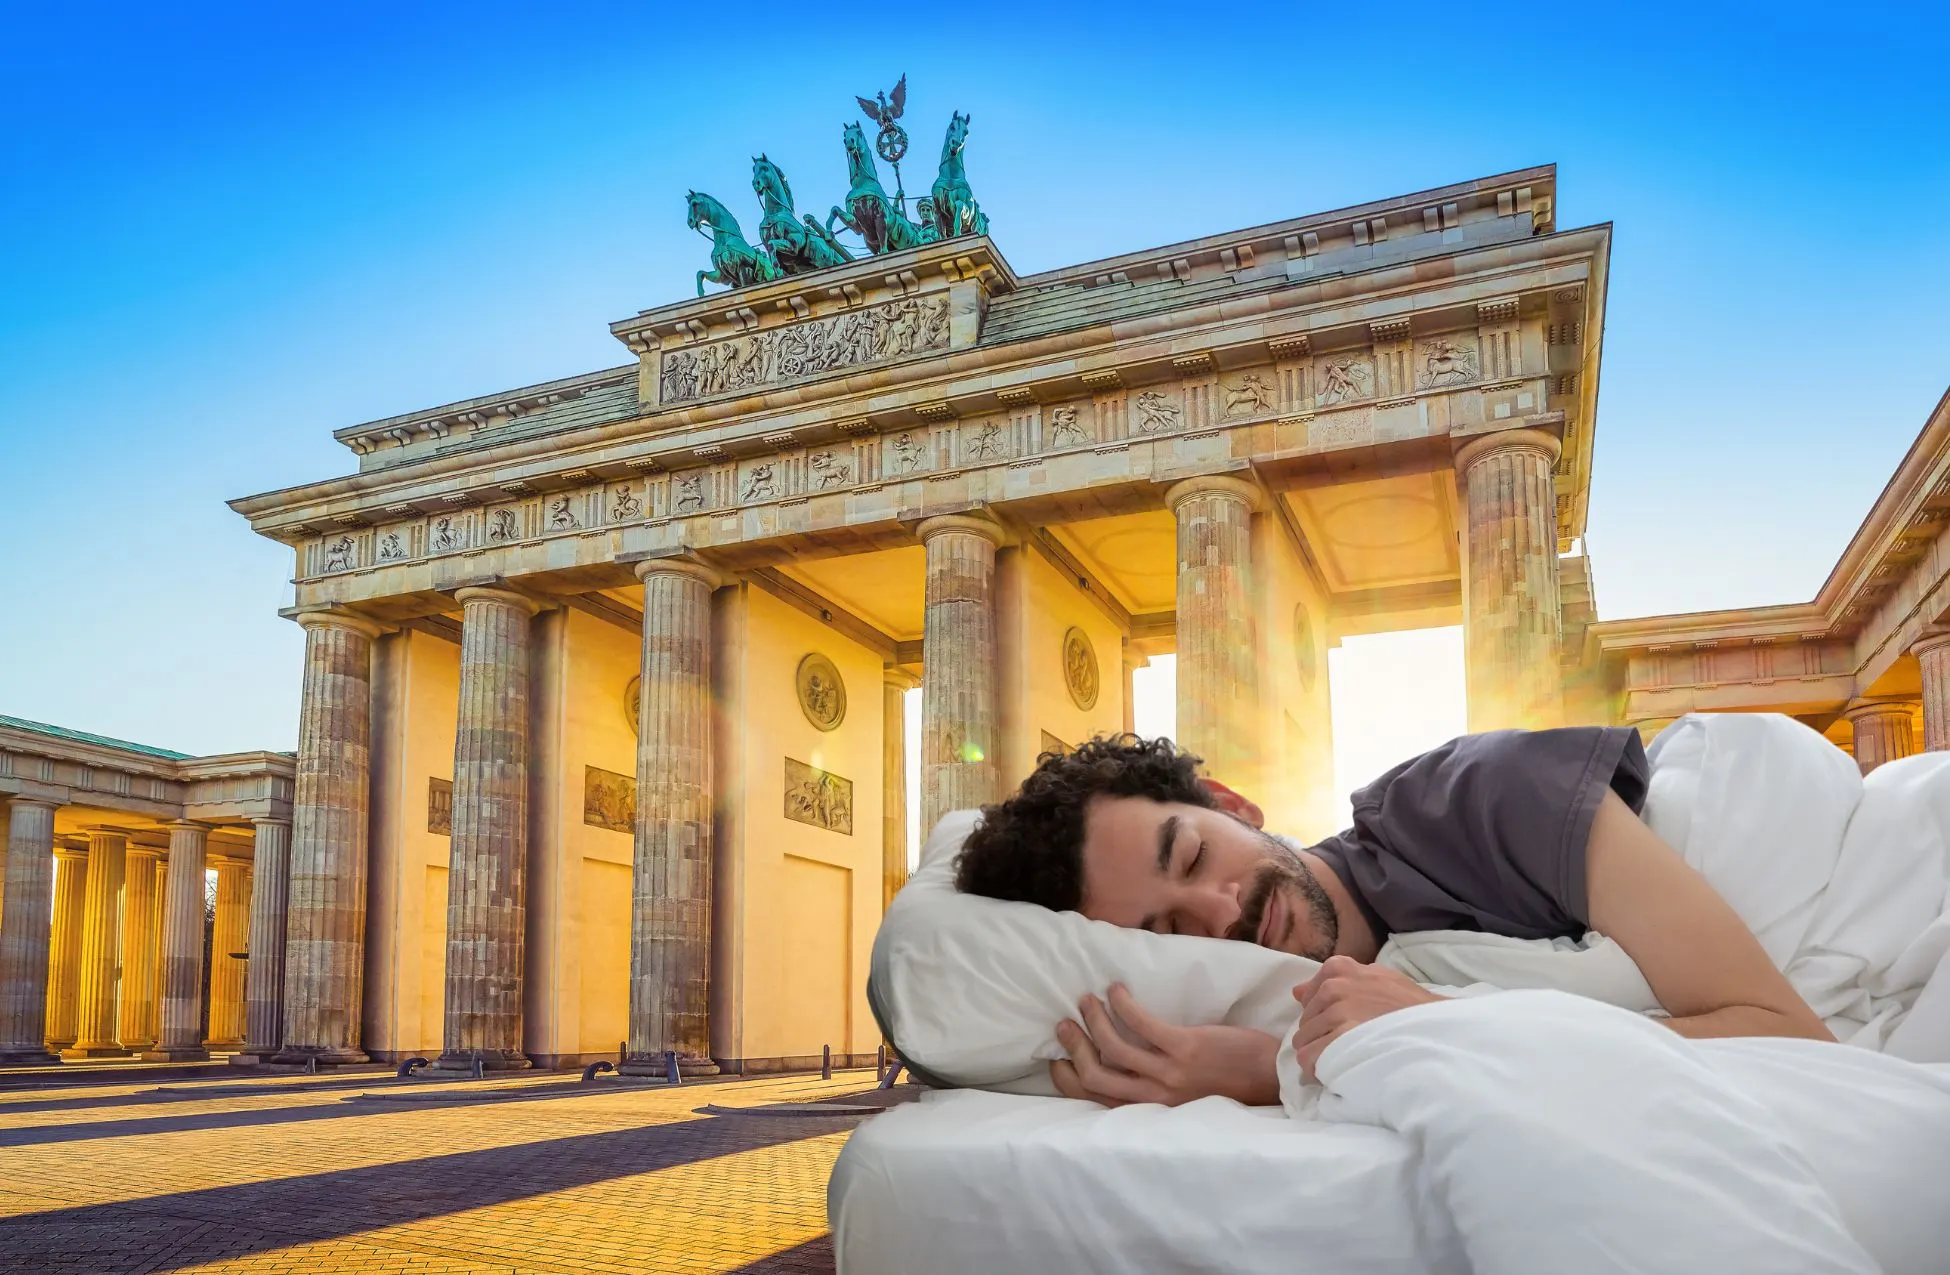 Best Hotels in Berlin: Top Spots for Unforgettable Getaways